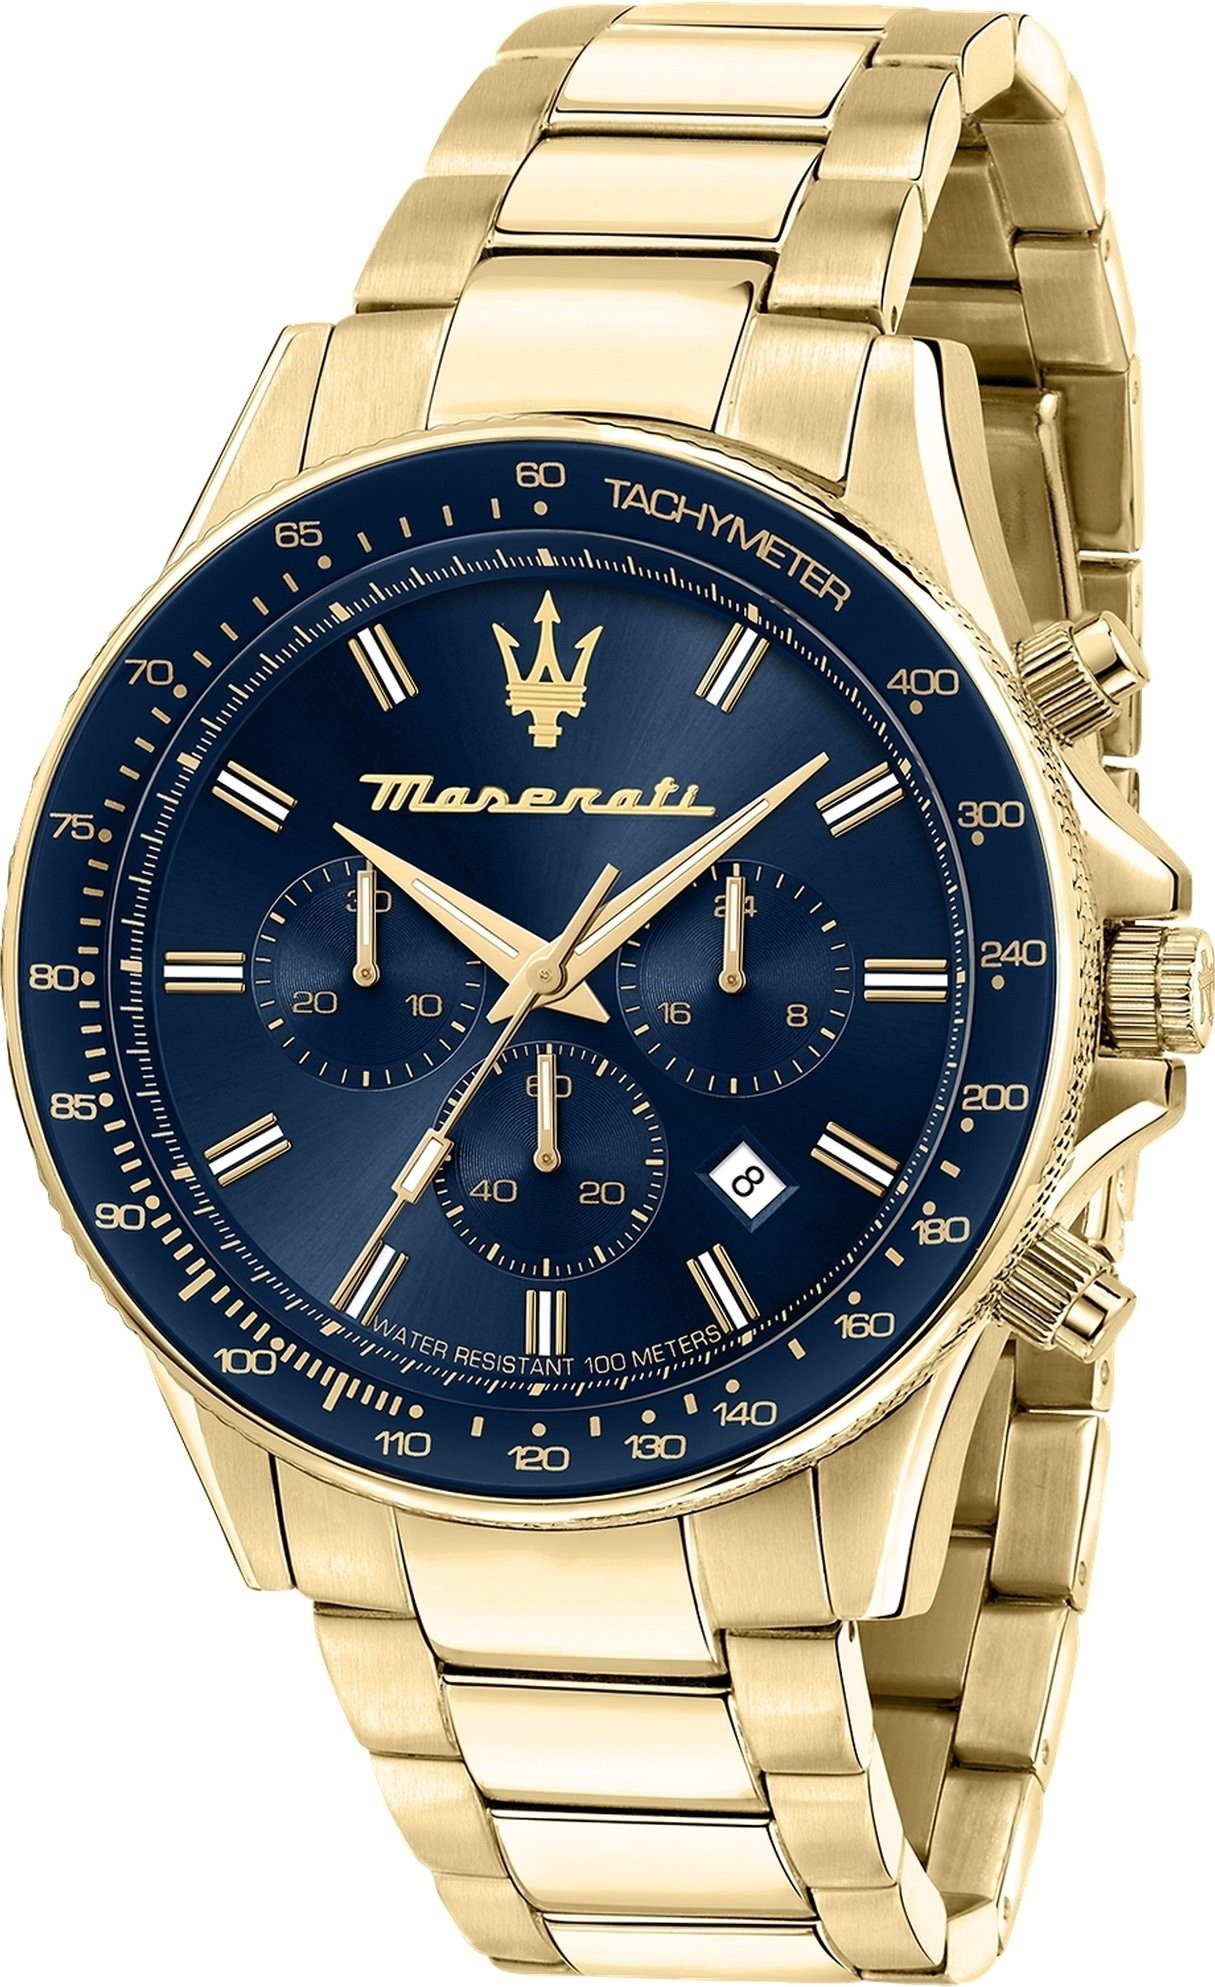 MASERATI Chronograph Maserati Herren Uhr Chronograph, Herrenuhr rund, groß (ca. 44mm) Edelstahlarmband, Made-In Italy blau, gold